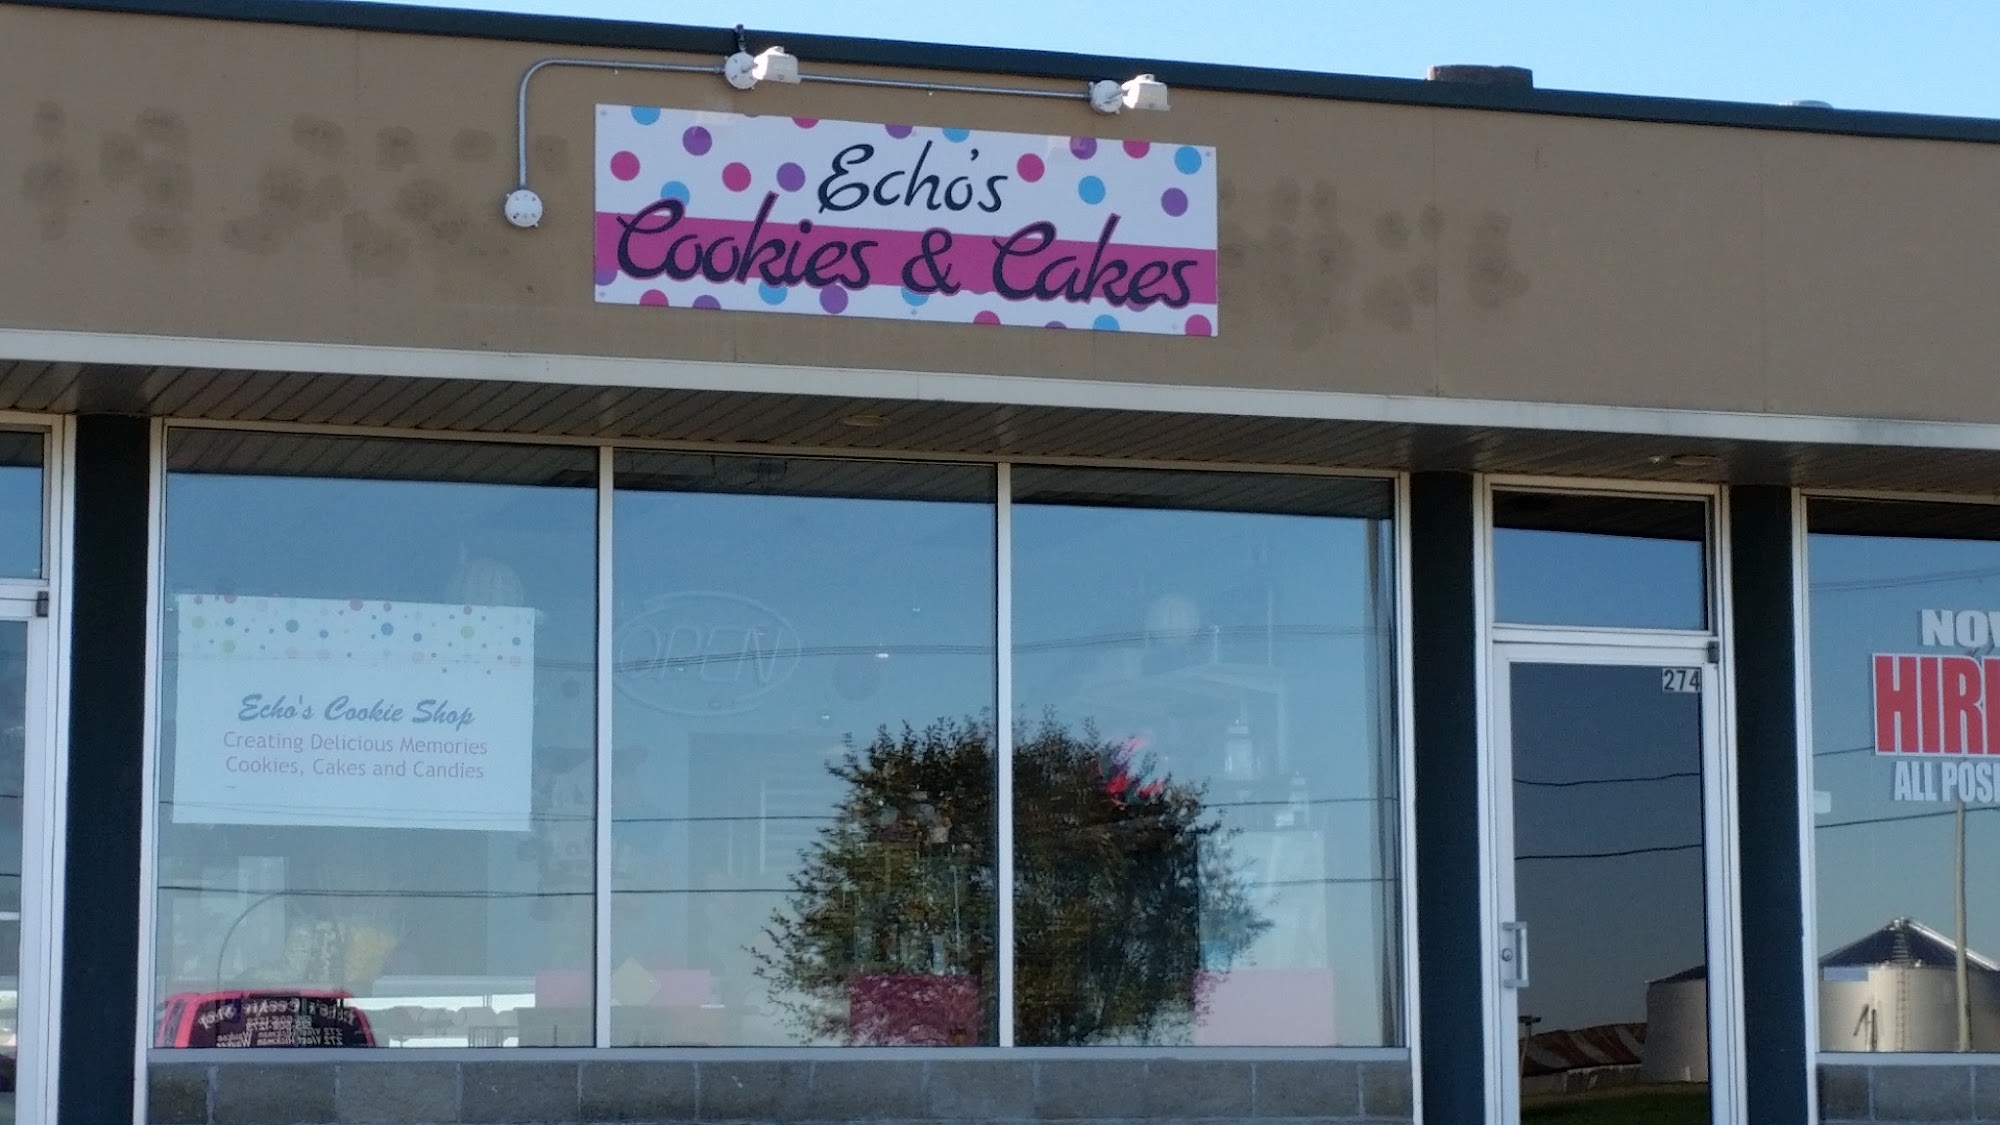 Echo's Cookie Shop